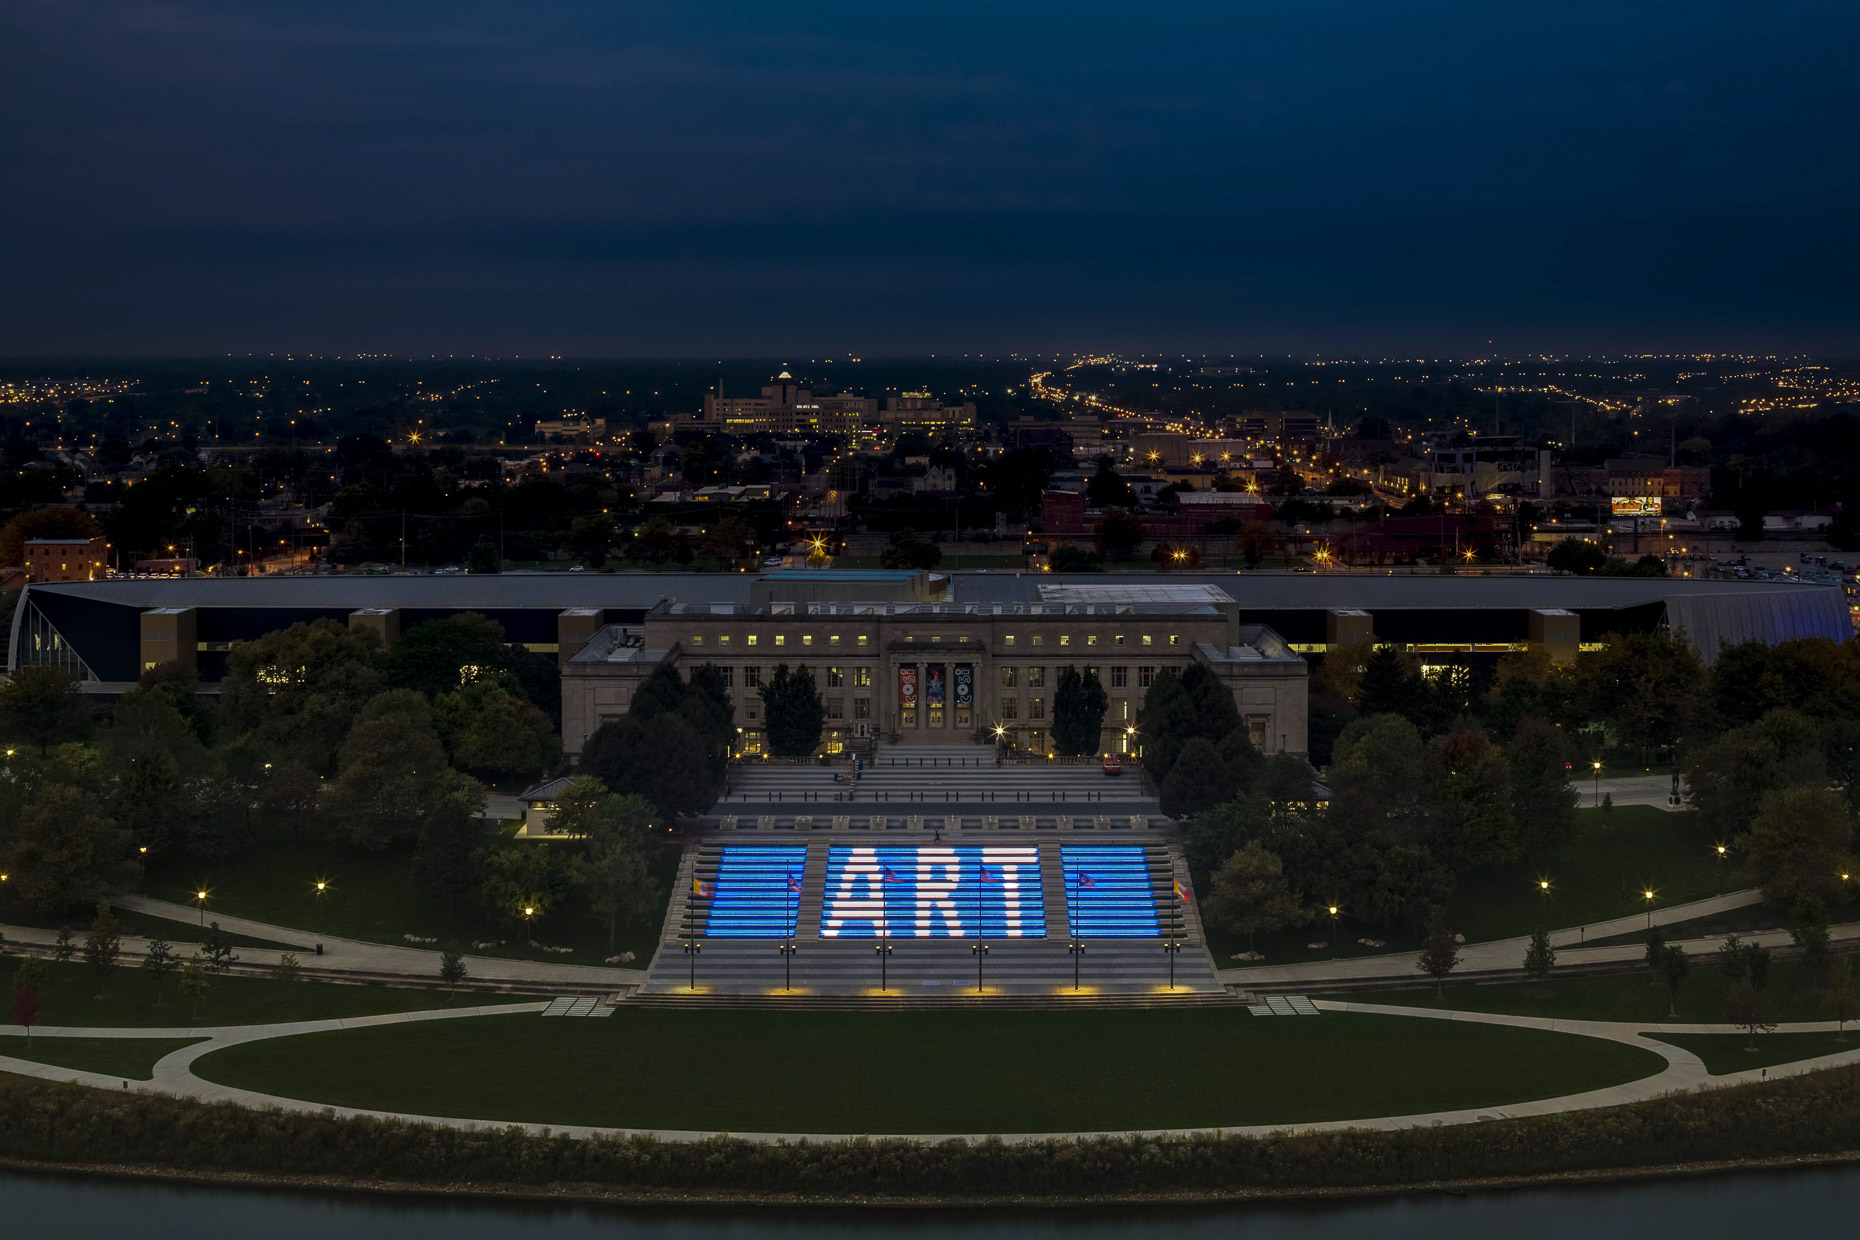 Genoa Park Riverfront Amphitheater  LED Lighting Installation by LumenPulse & Illumination Arts photographed by Lauren K Davis based in Columbus, Ohio